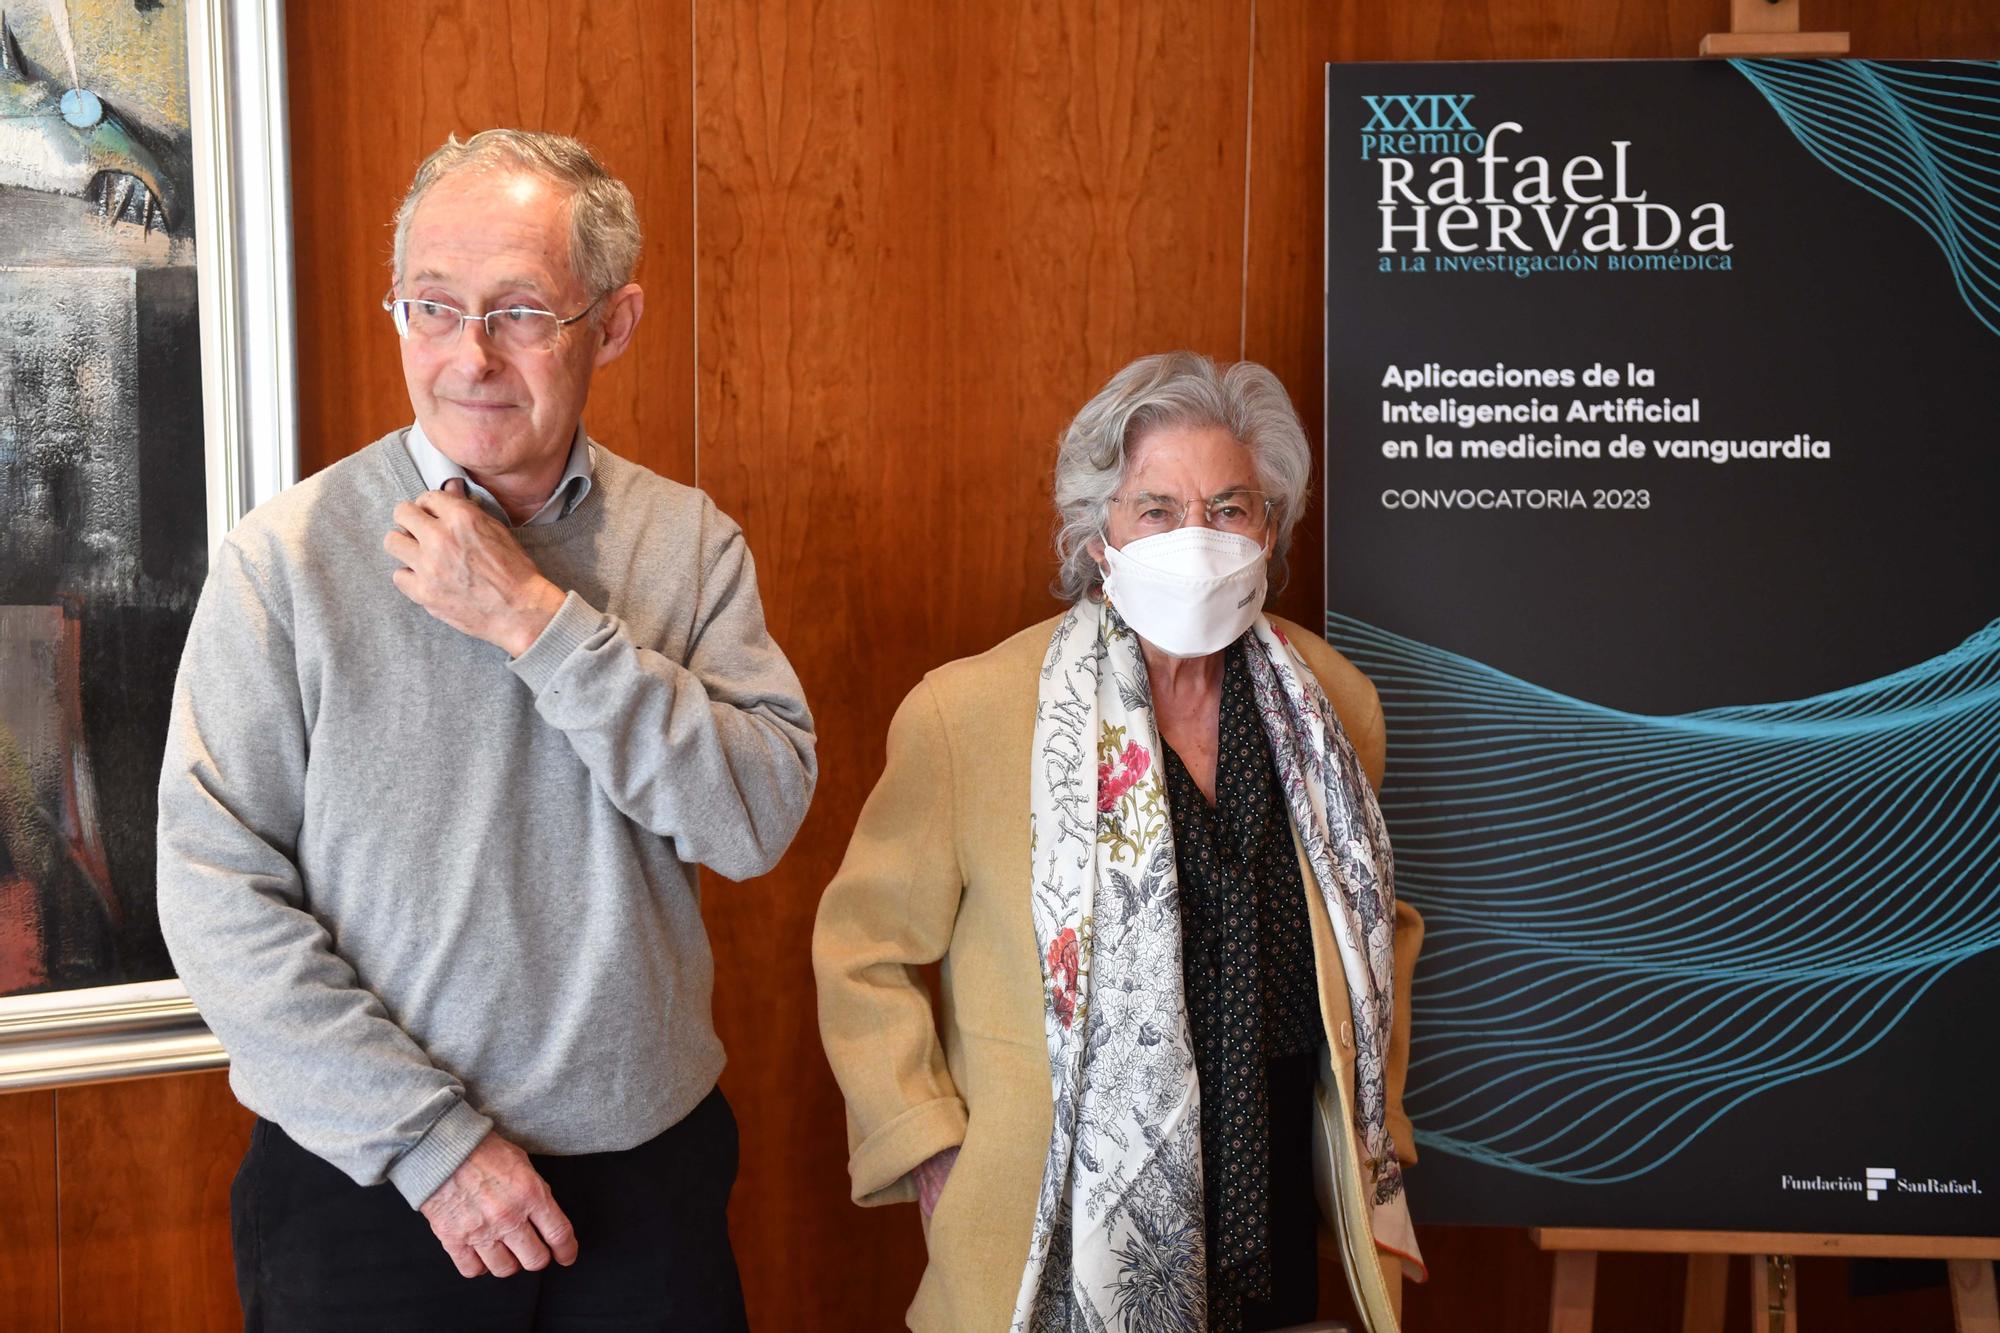 Presentación del XXIX Premio Rafael Hervada en A Coruña